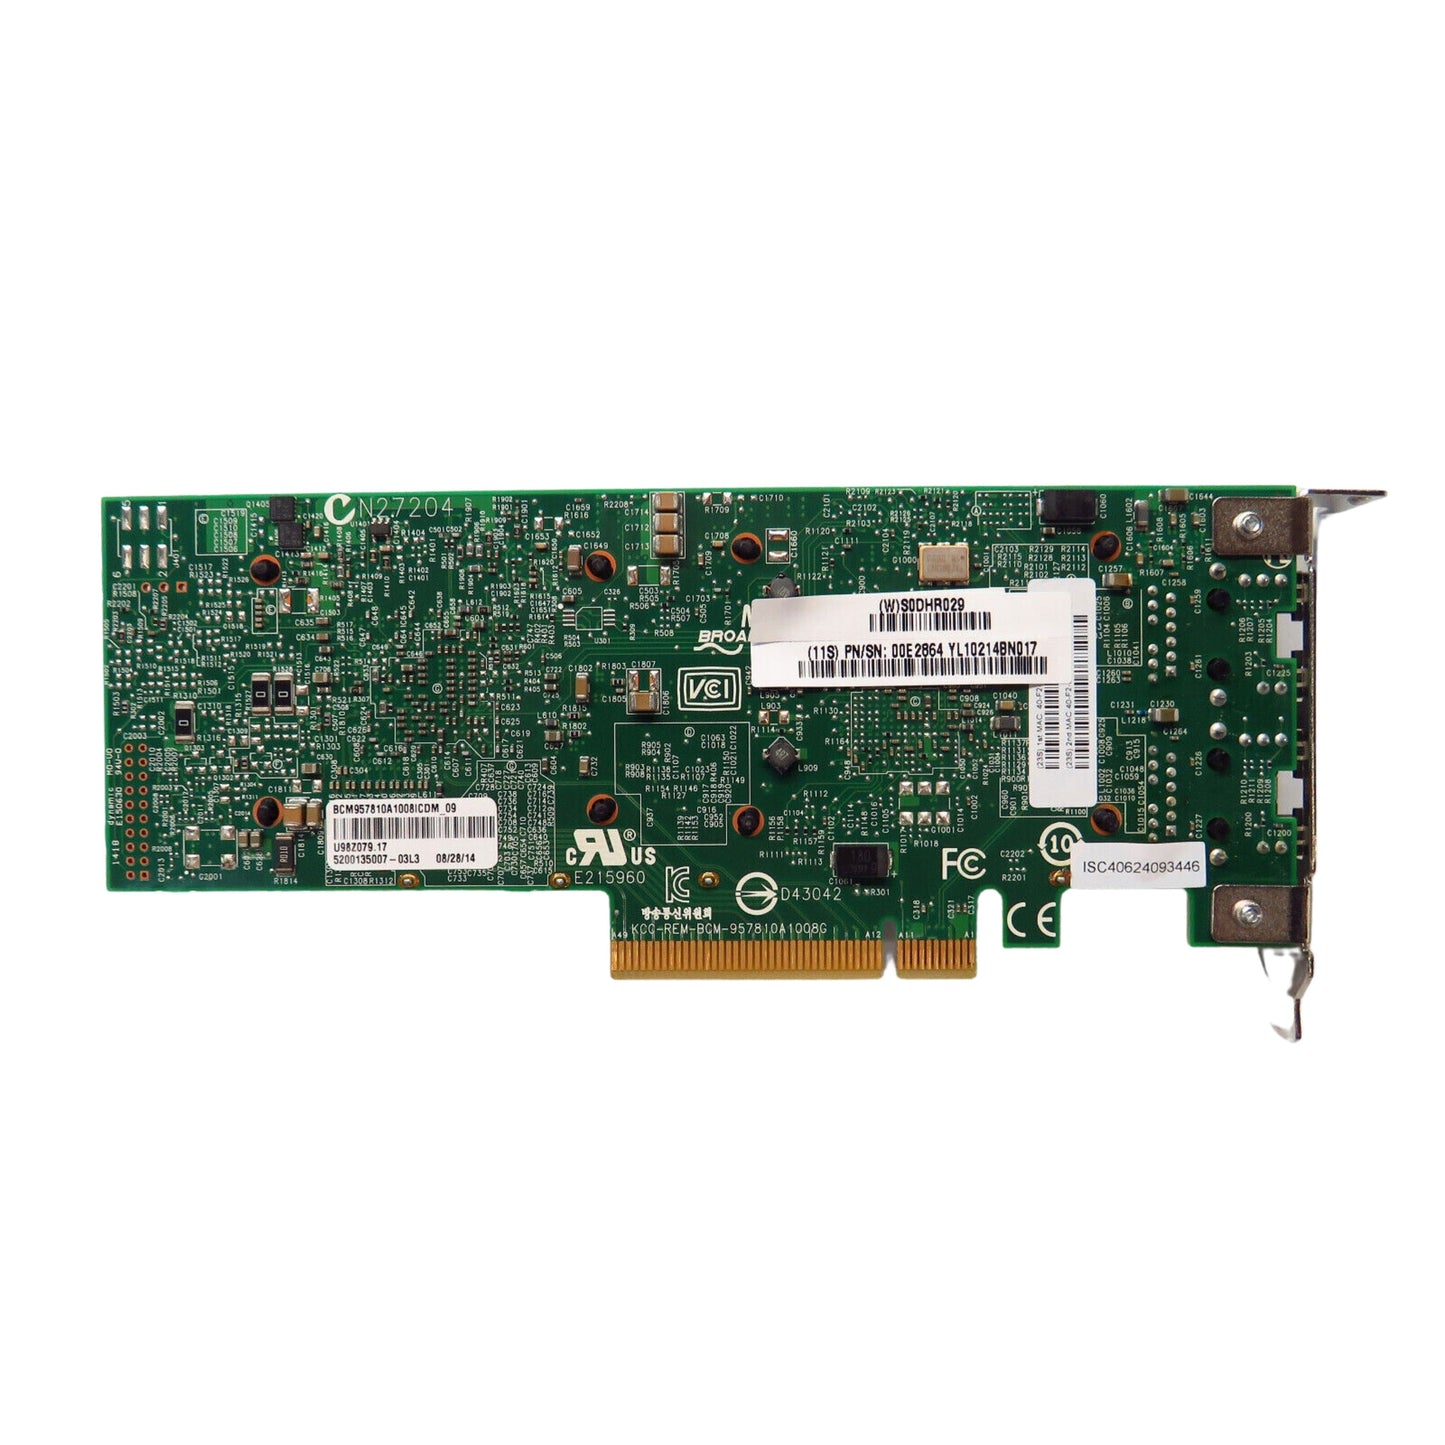 IBM 00E2864 EN0X 2CC4 PCIe2 2 Port 10GbE BaseT RJ45 Adapter Card (Refurbished)